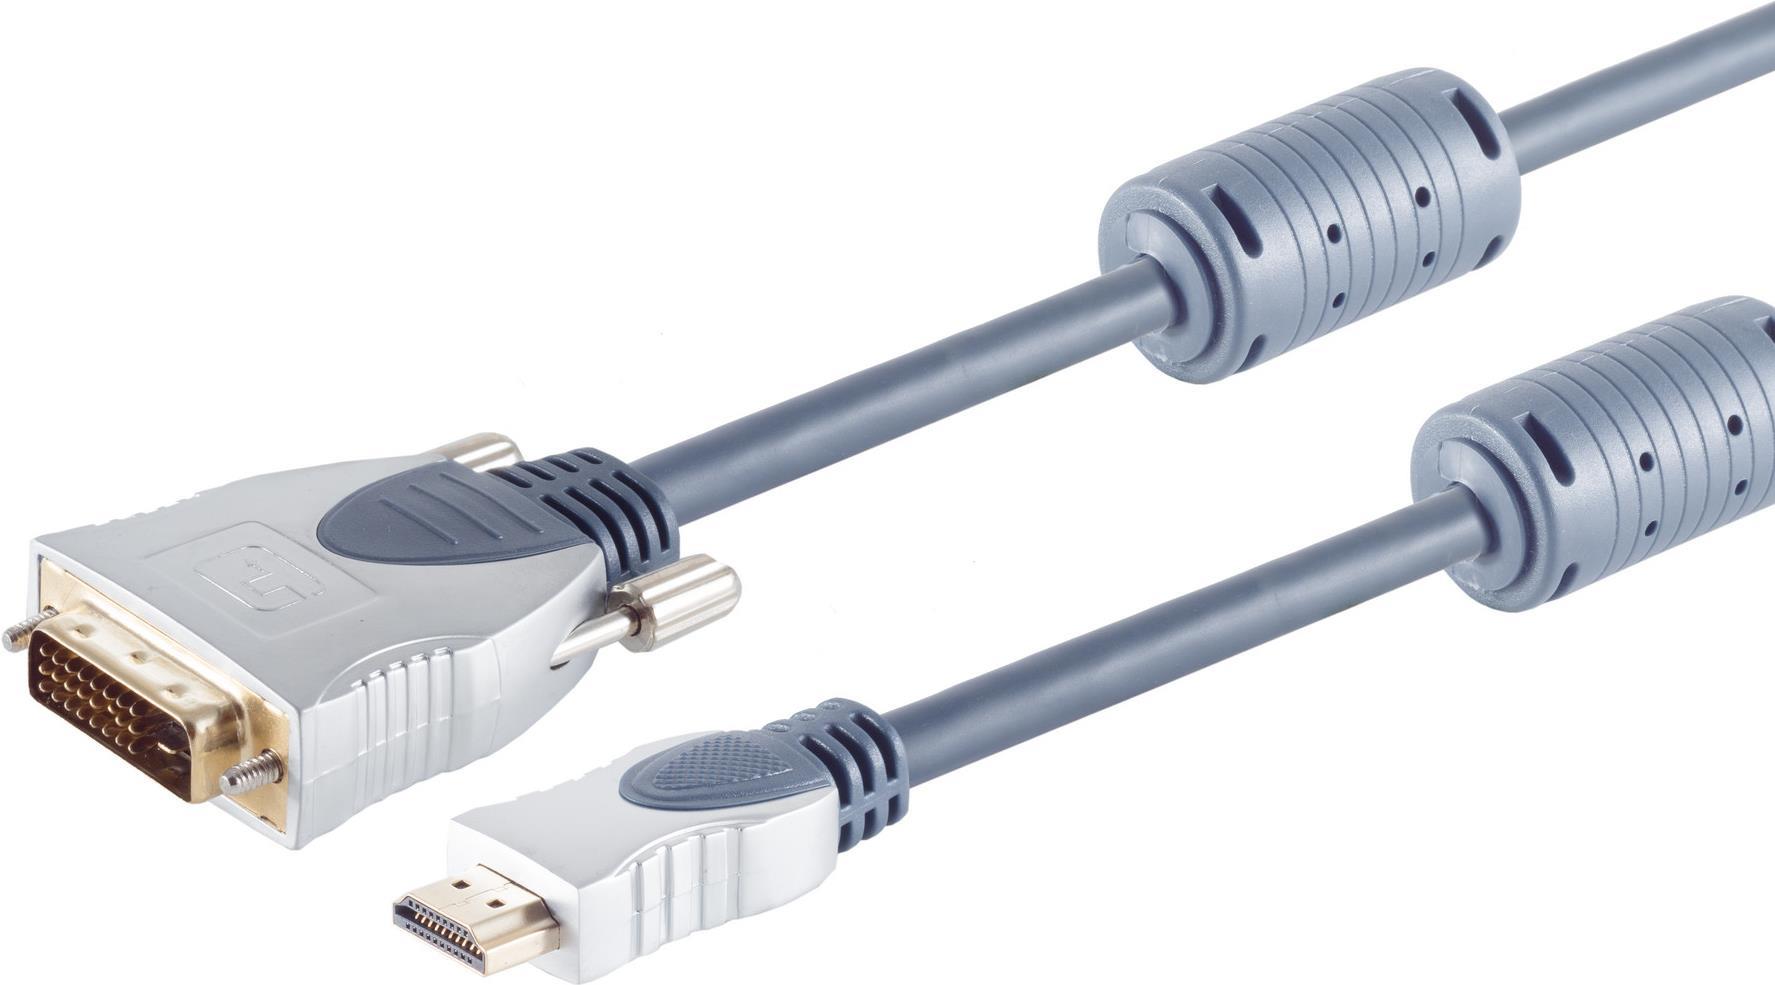 S/CONN maximum connectivity Home-Cinema HDMI Stecker auf DVI-D-Stecker (24+1), Ferrits, verchromte Metall-Stecker, 2x Ferrit, vergoldete Kontakte, --1,3b, 1,5m (77481-MHQ)